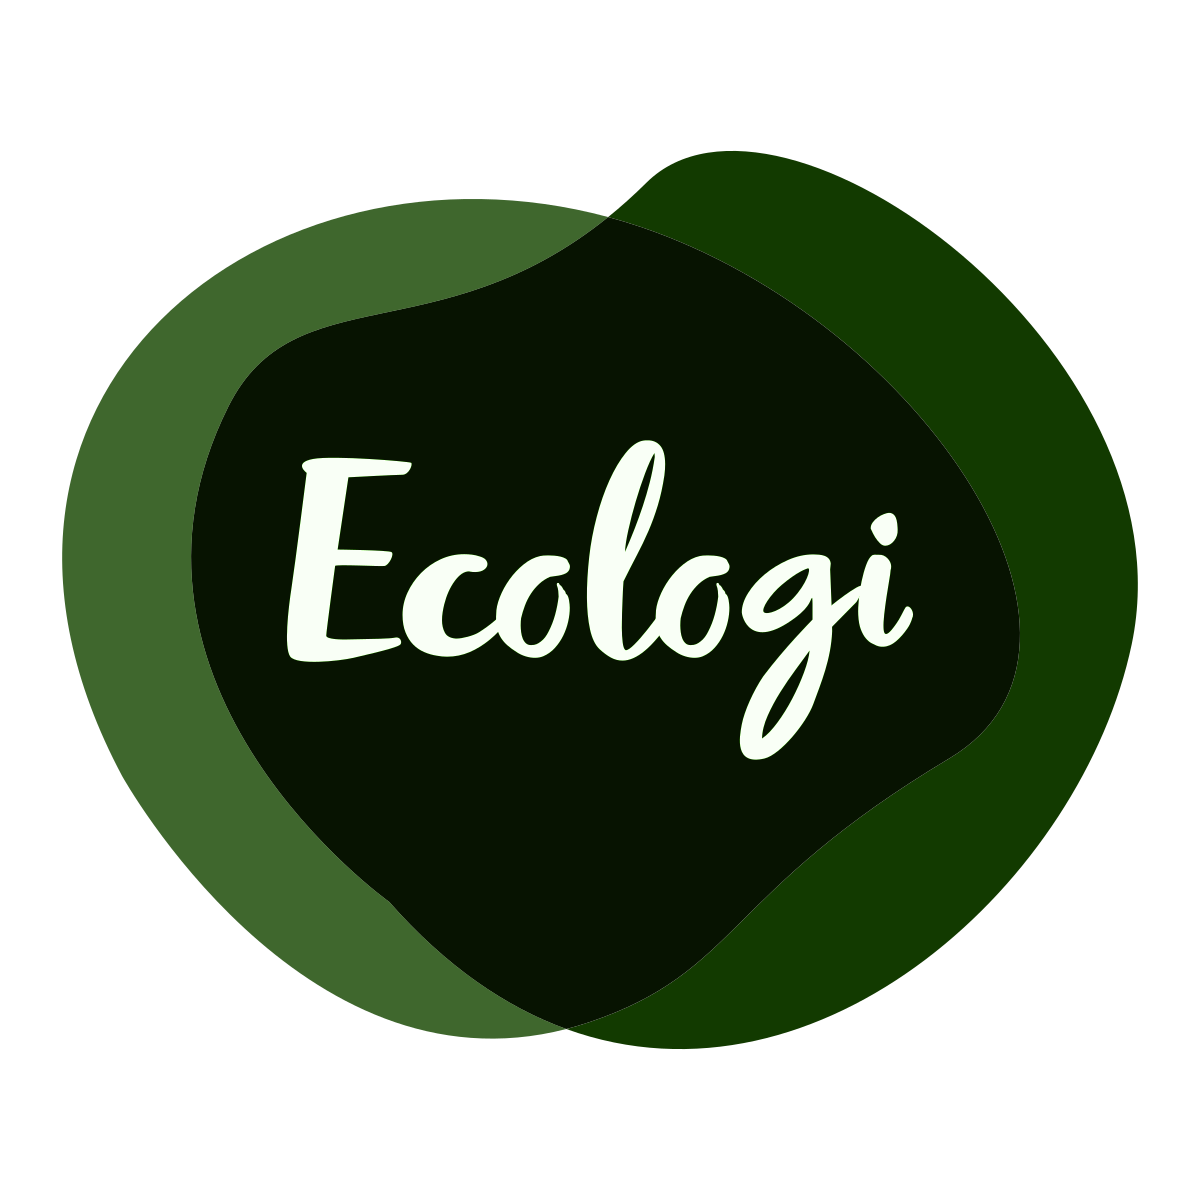 The Baptist - Ecologi Value